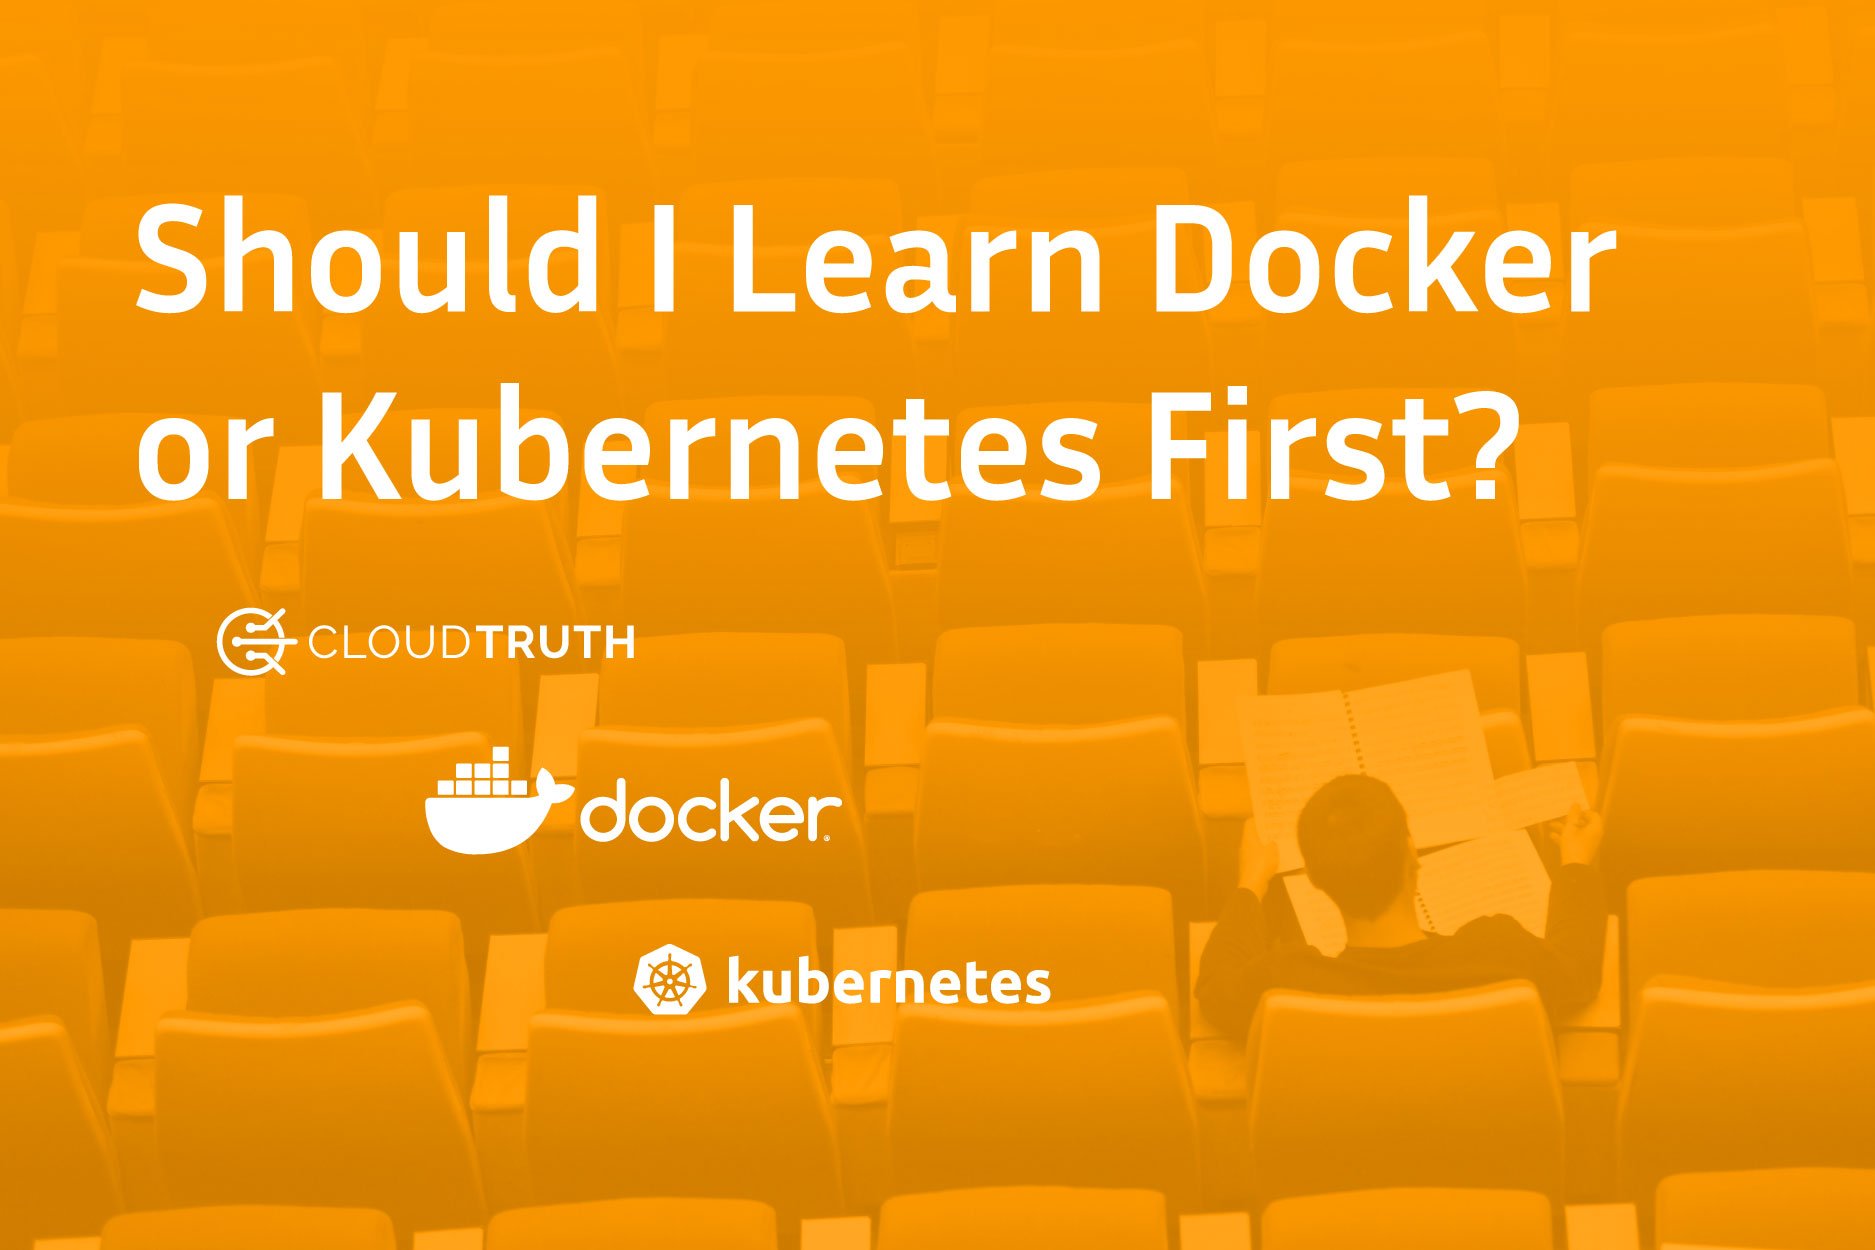 Should I learn Docker or Kubernetes first?